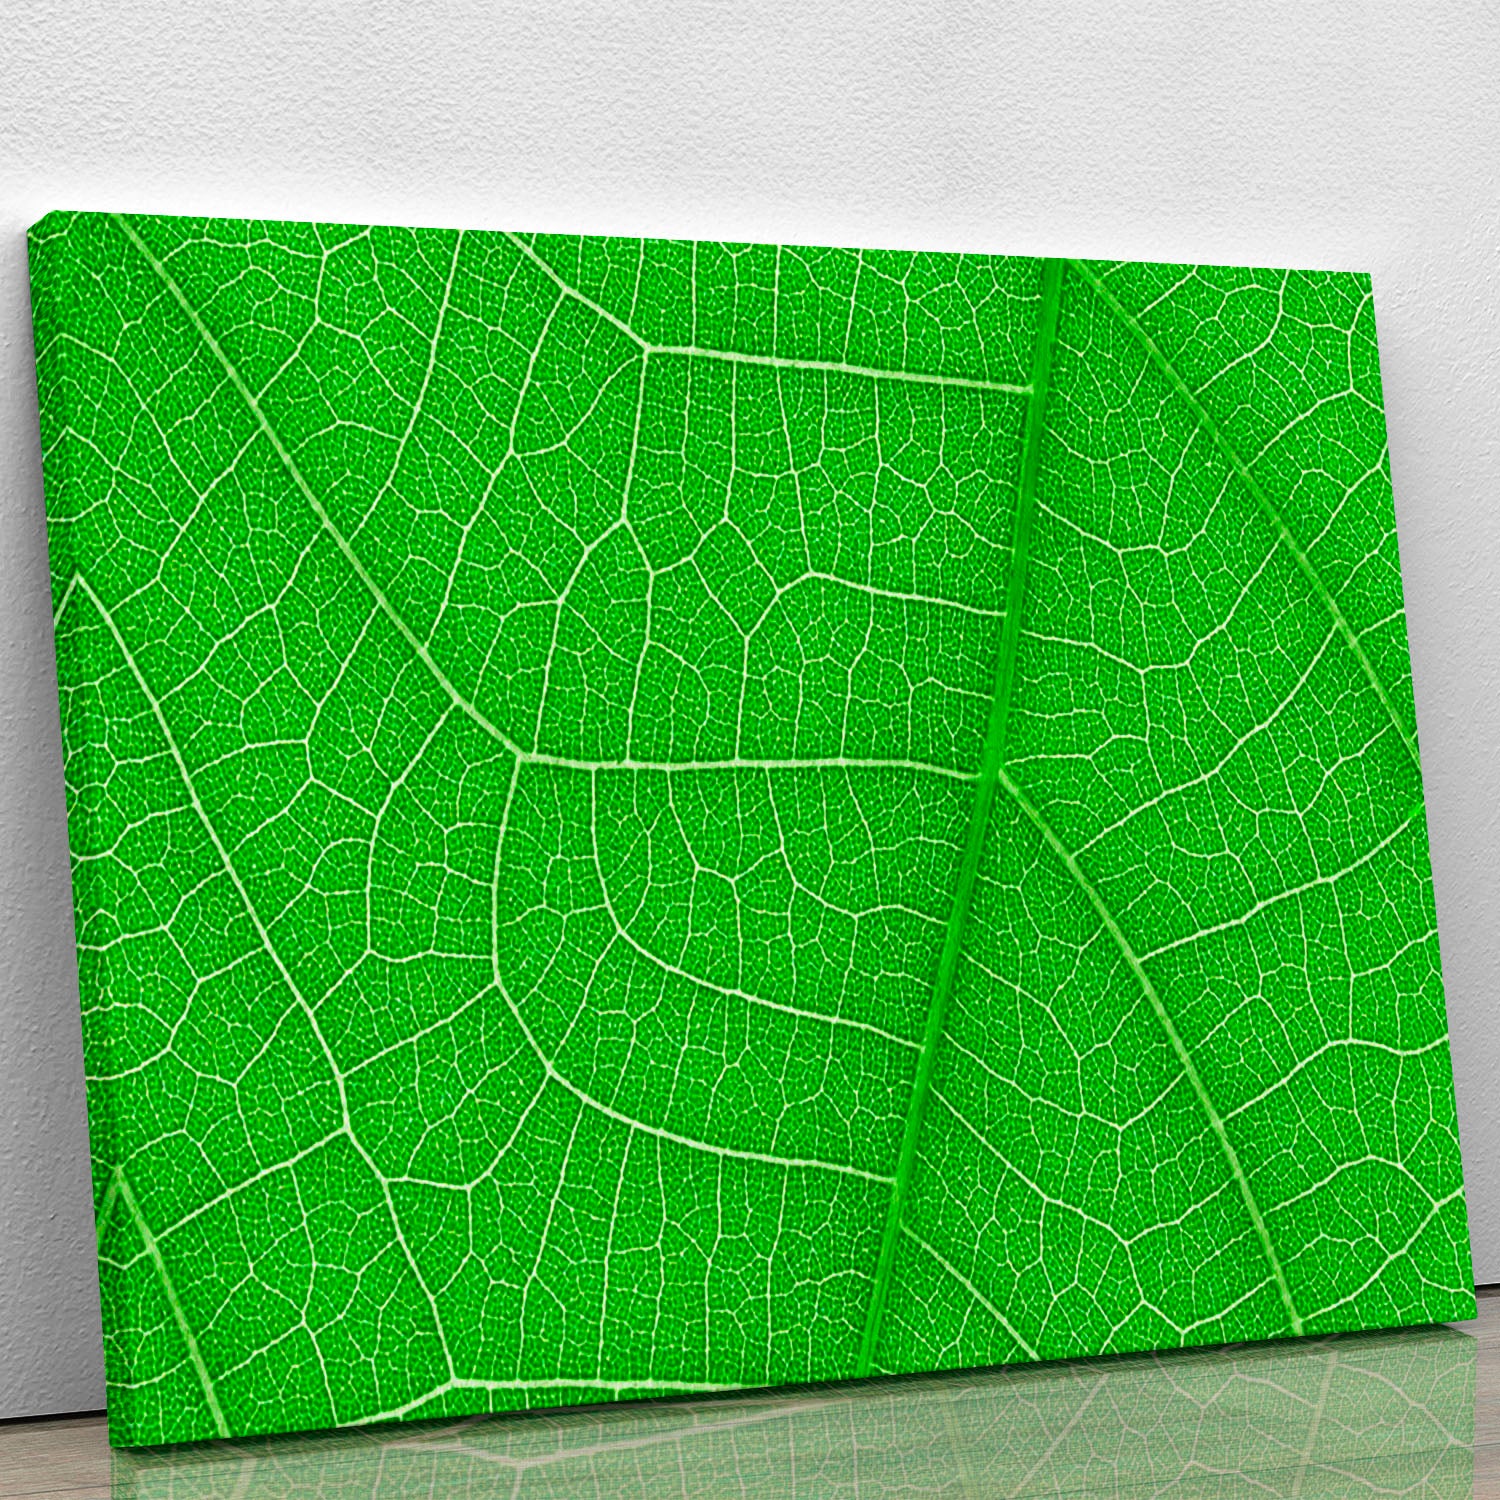 Leaf texture Canvas Print or Poster - Canvas Art Rocks - 1